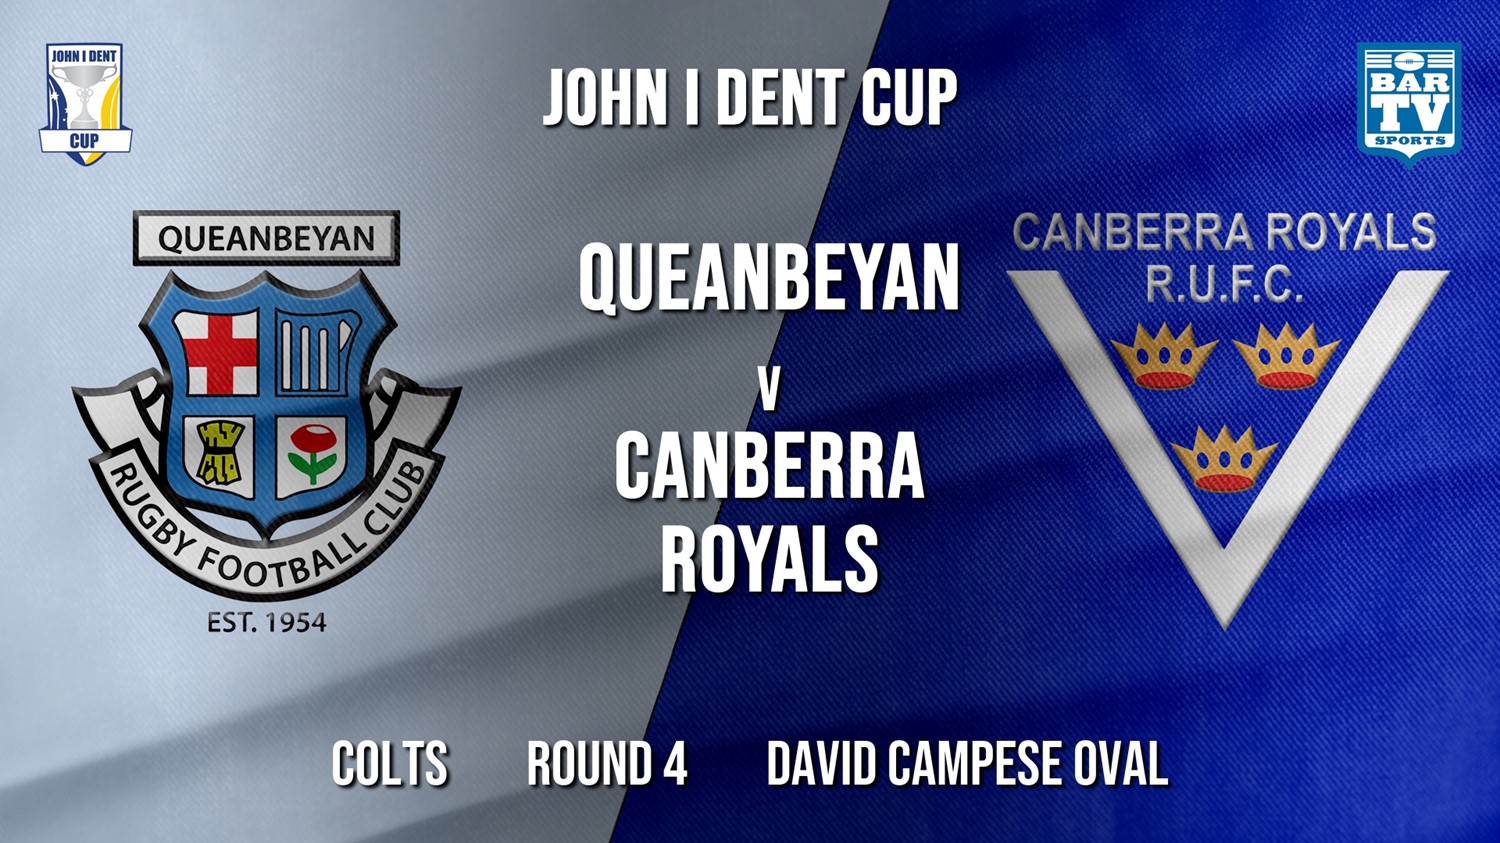 John I Dent Round 4 - Colts - Queanbeyan Whites v Canberra Royals Minigame Slate Image